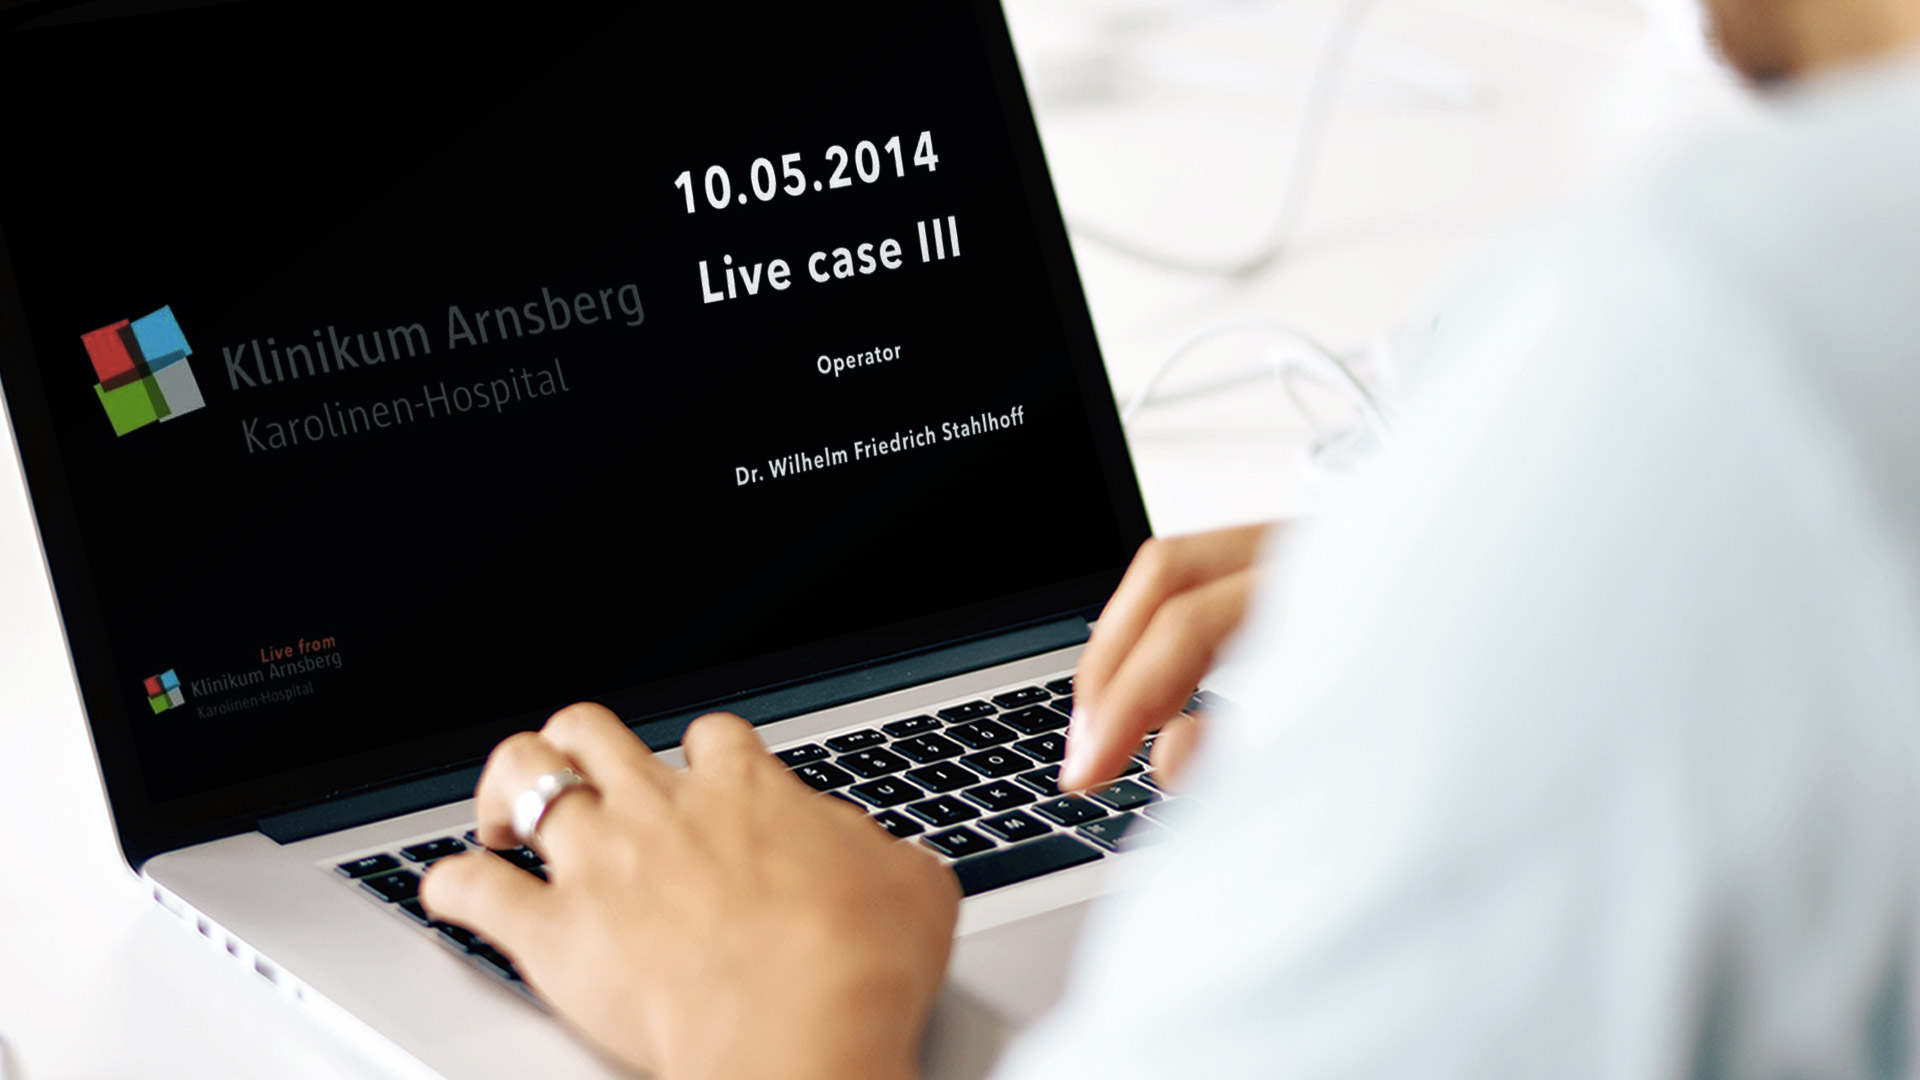 Klinikum Arnsberg congress 2014 - live case 3